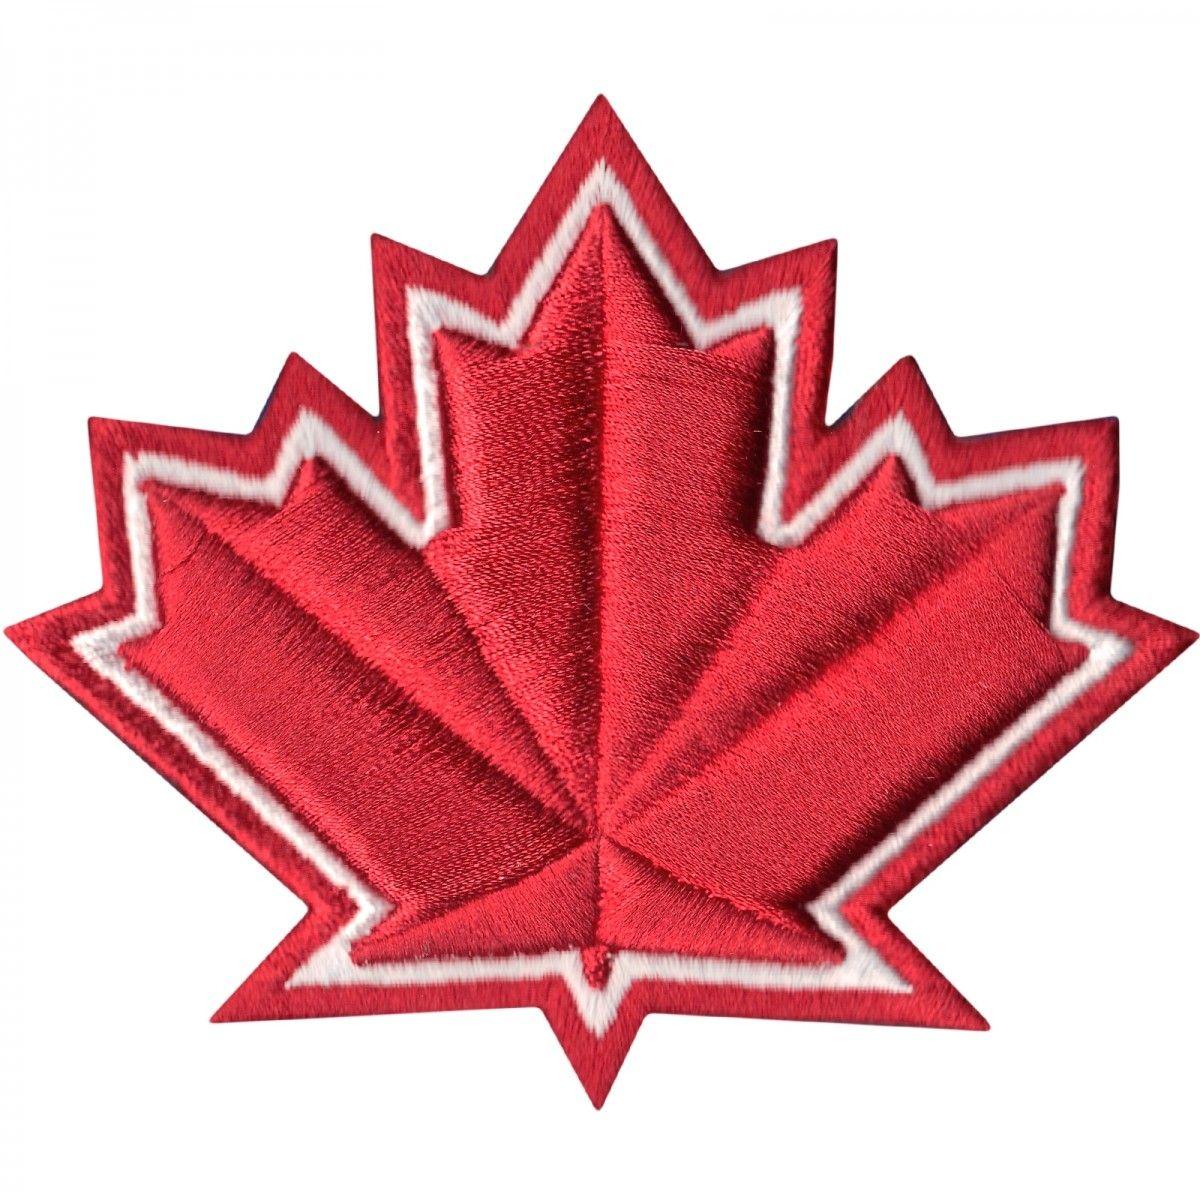 Toronto Blue Jays Maple Leaf Logo - Toronto Blue Jays Red Maple Leaf 3D Jersey Patch